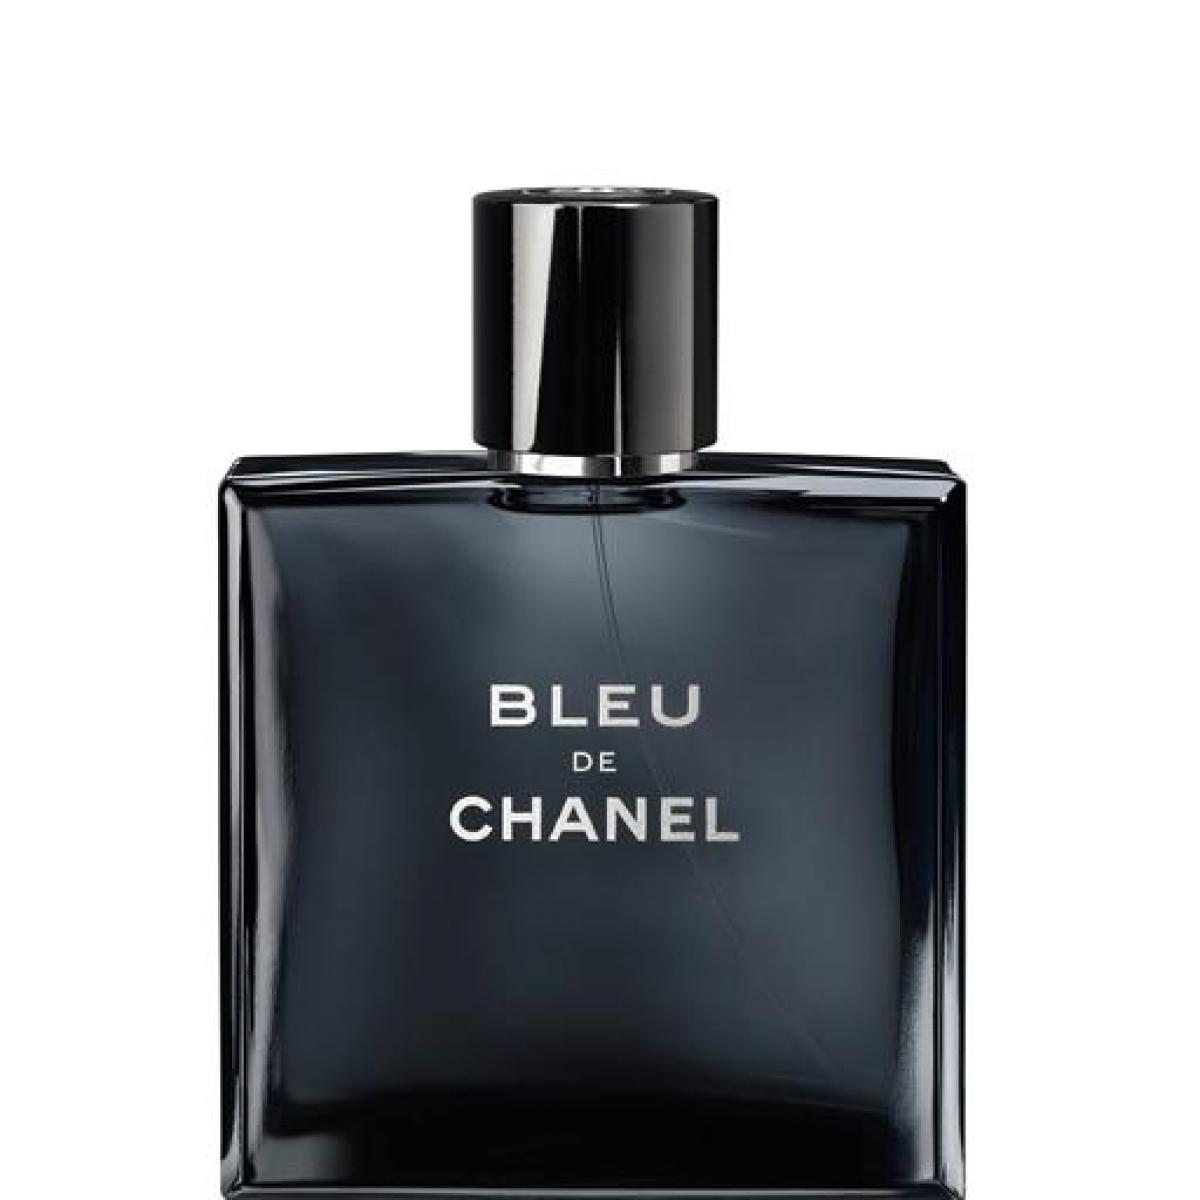 Bleu de Chanel, 50 ml, 56,70€